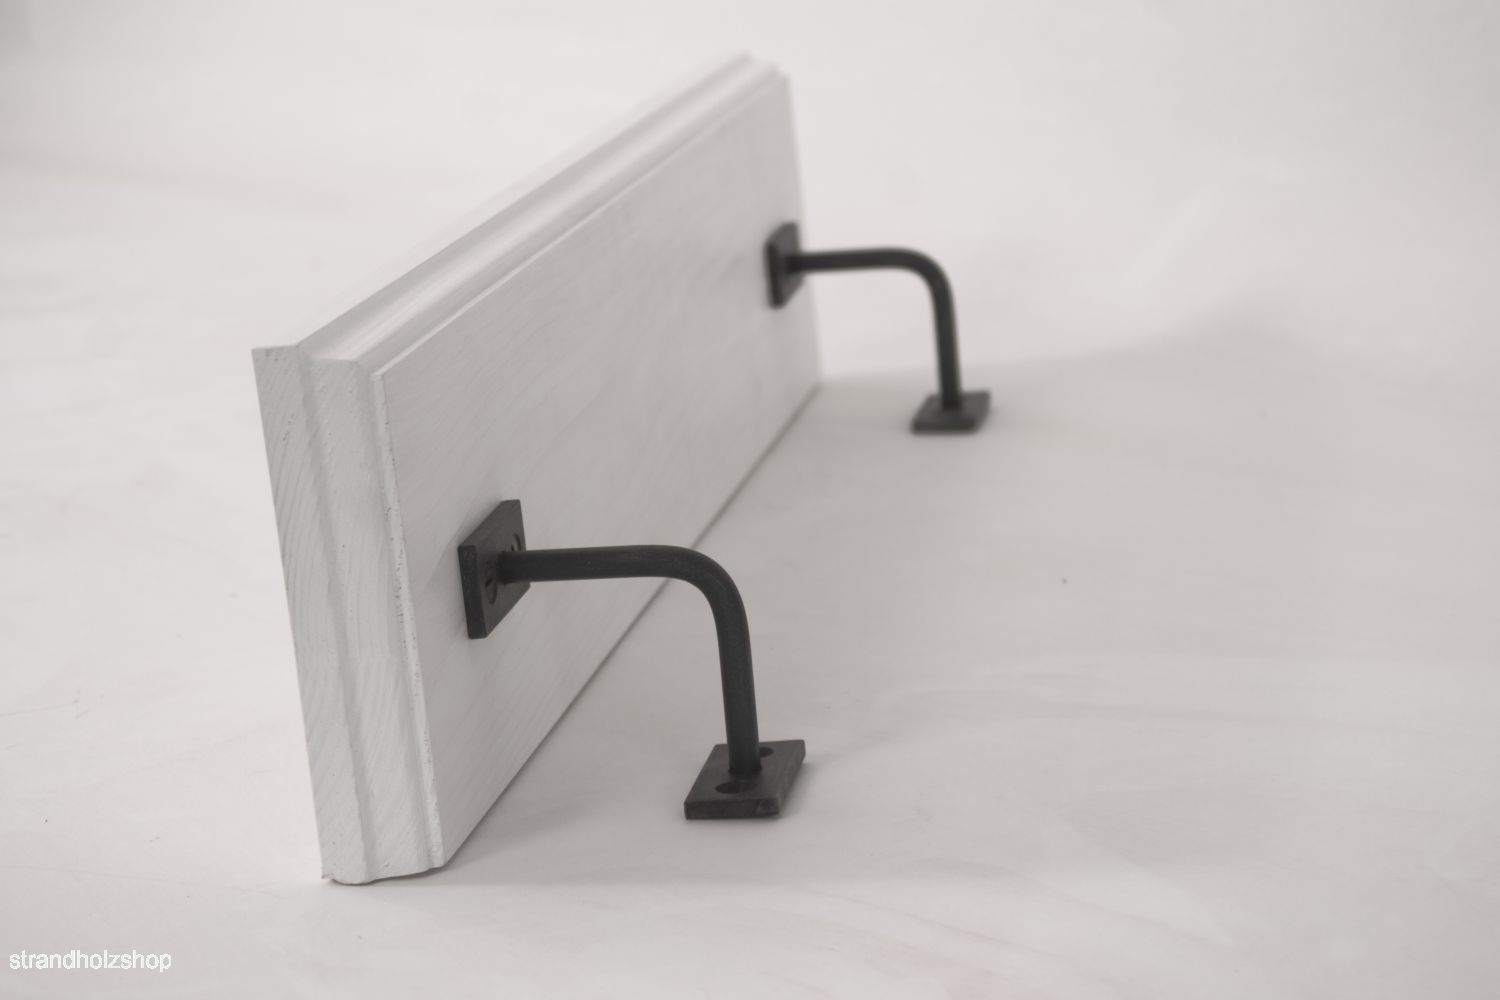 Wooden shelf with profile edge 76cm